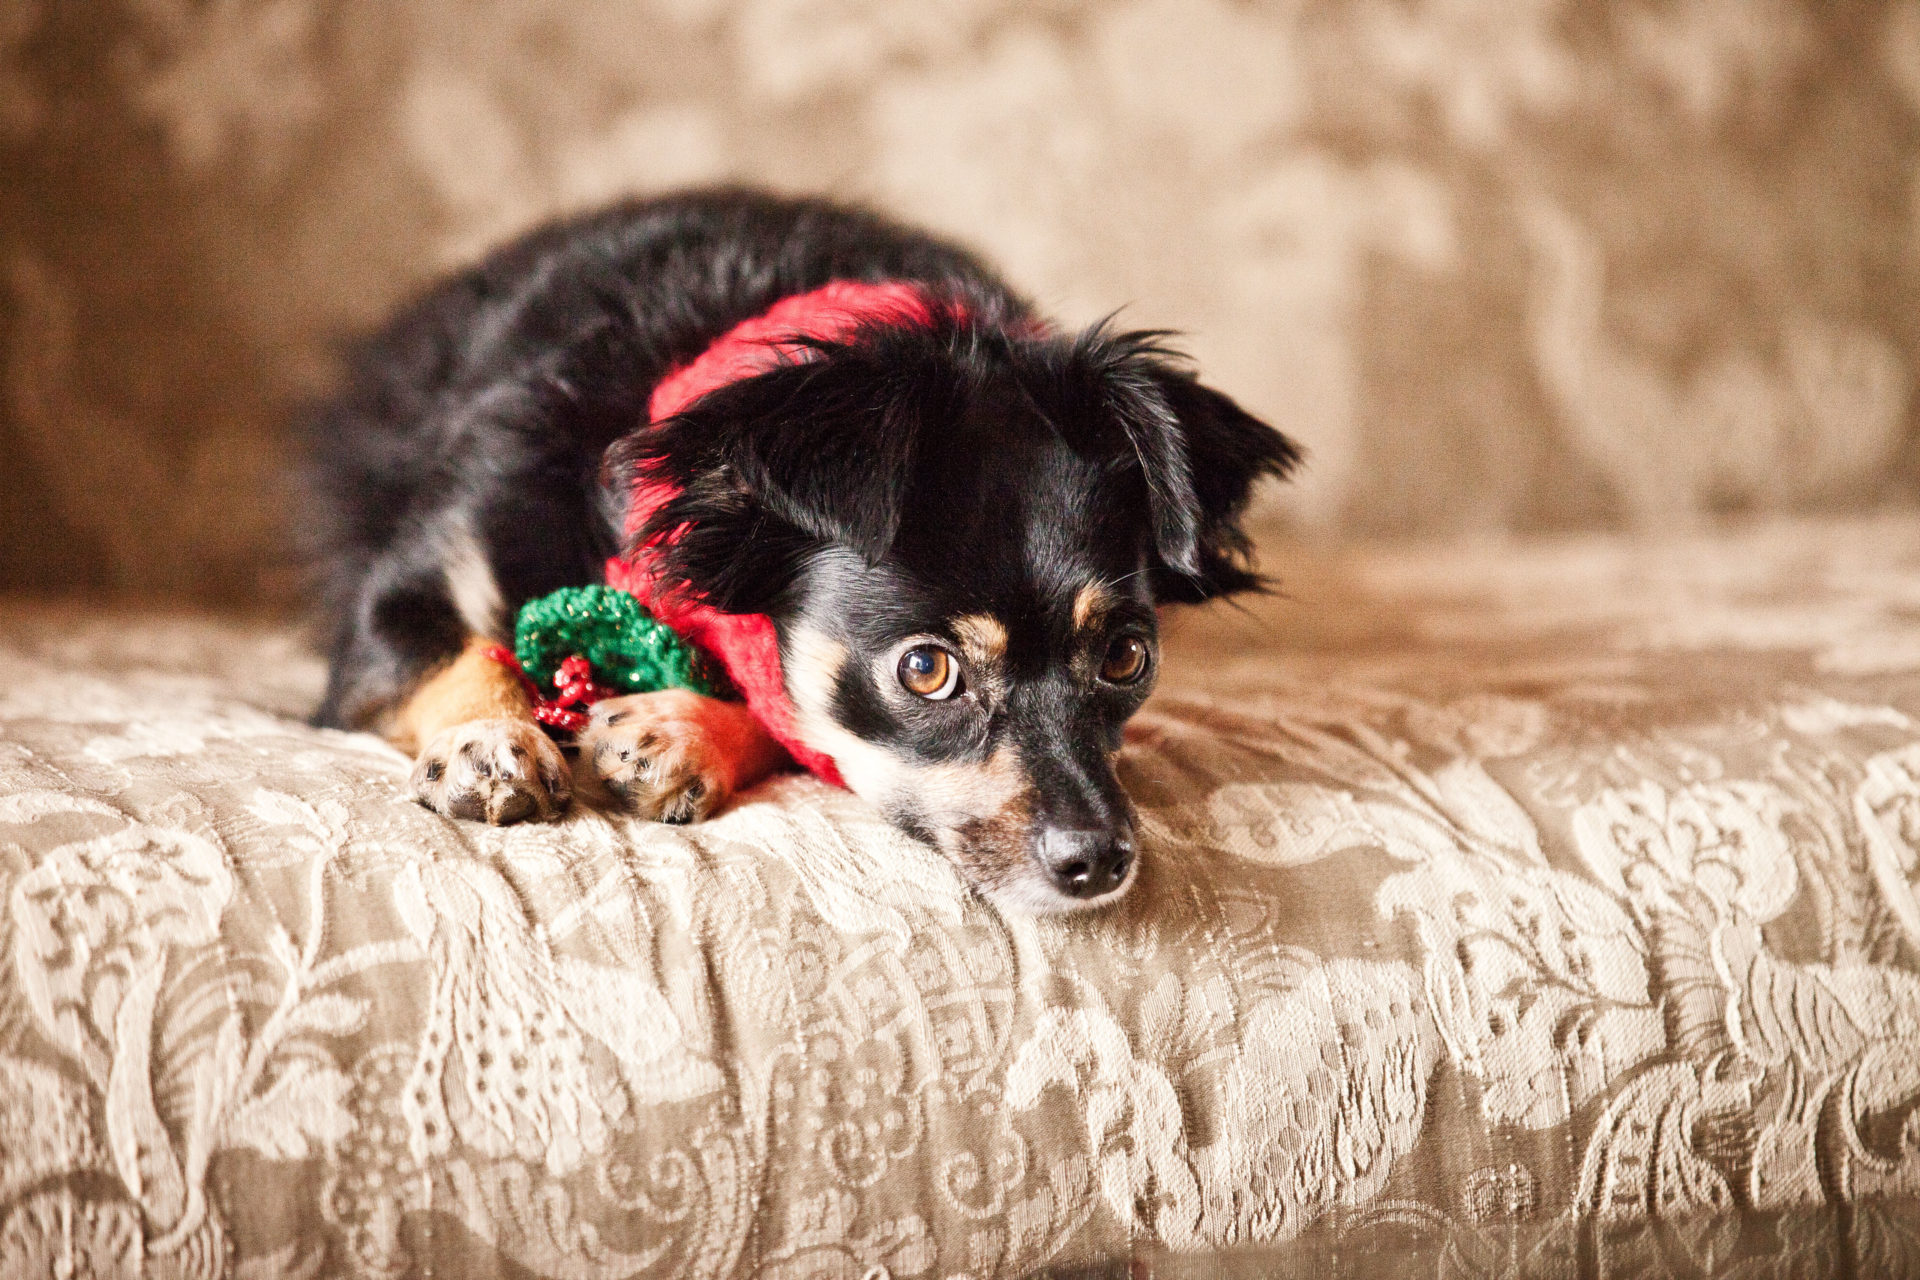 Portrait of a dog wearing a scarf. Image: Stephen Flint / Alamy